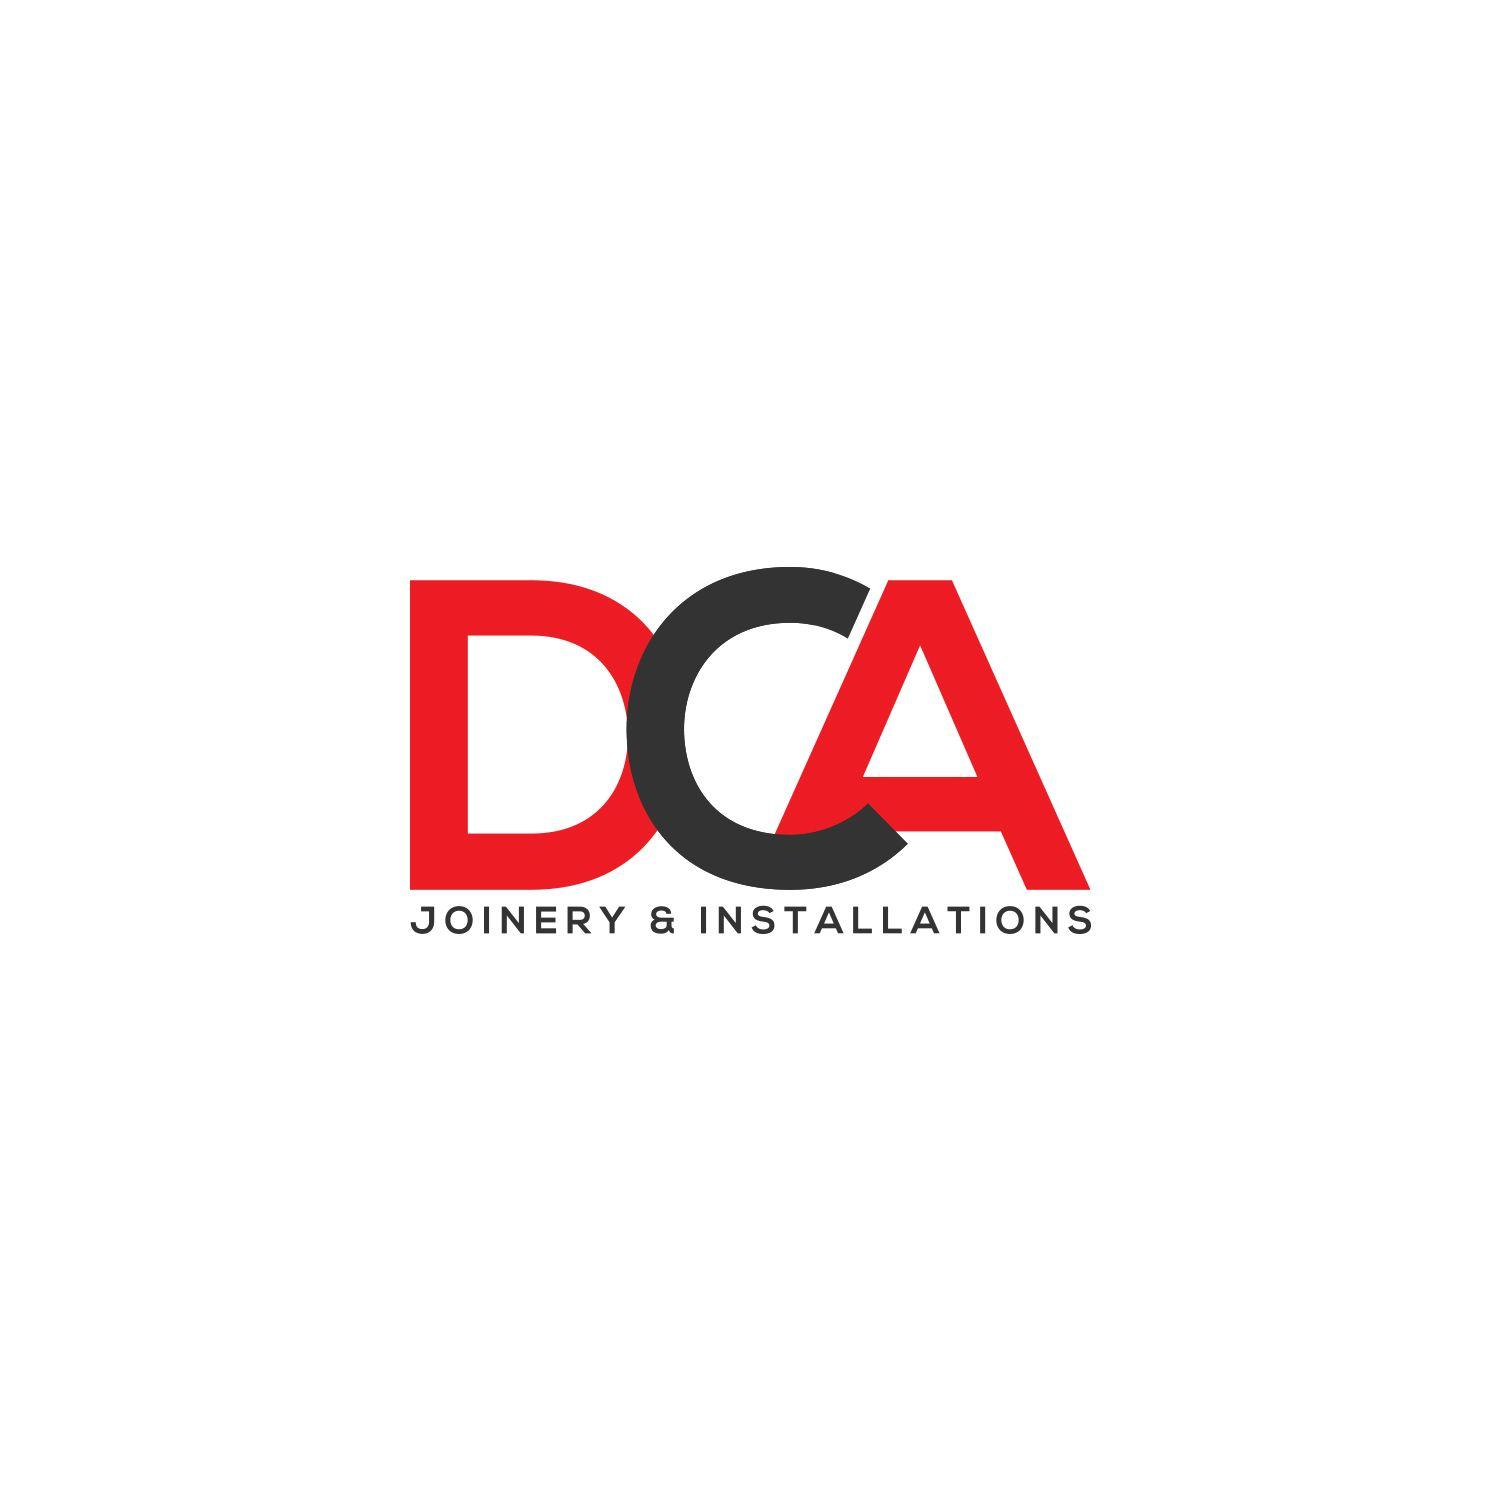 DCA Logo - Elegant, Playful, It Company Logo Design for DCA JOINERY ...